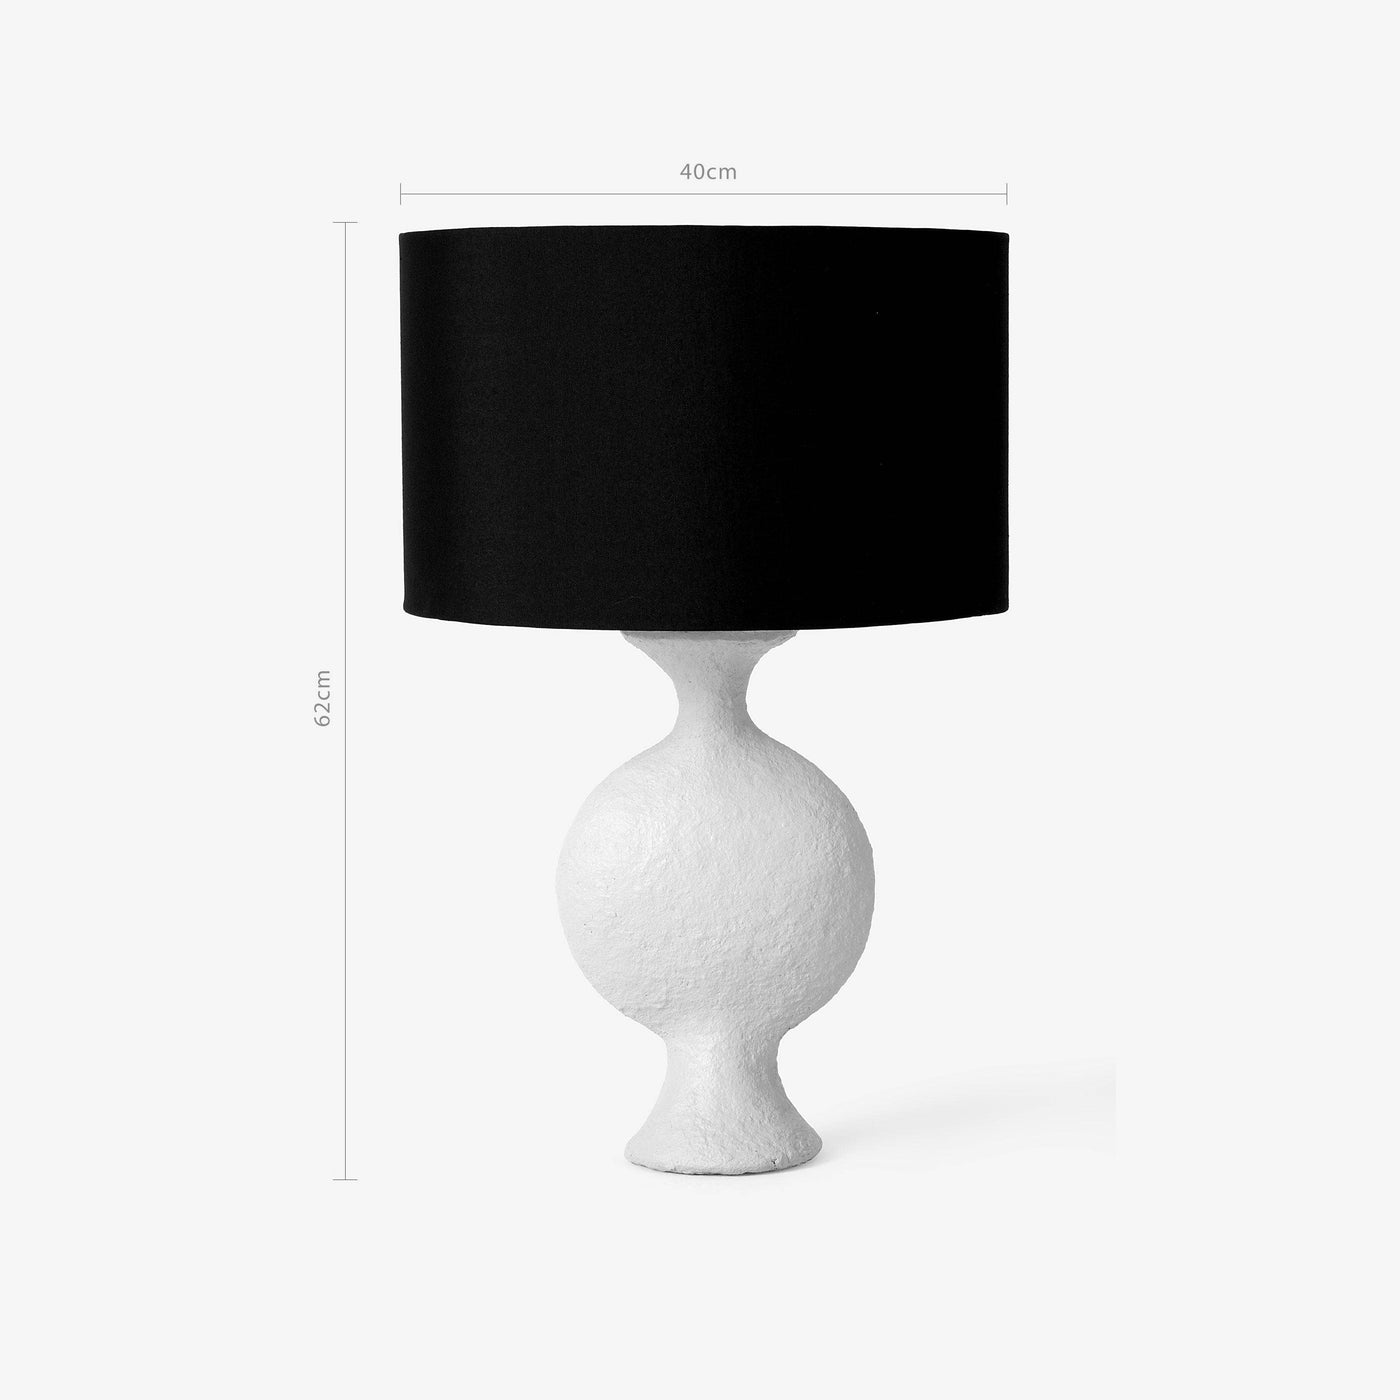 Bally Papier Mâché Table Lamp, Grey Table & Bedside Lamps sazy.com